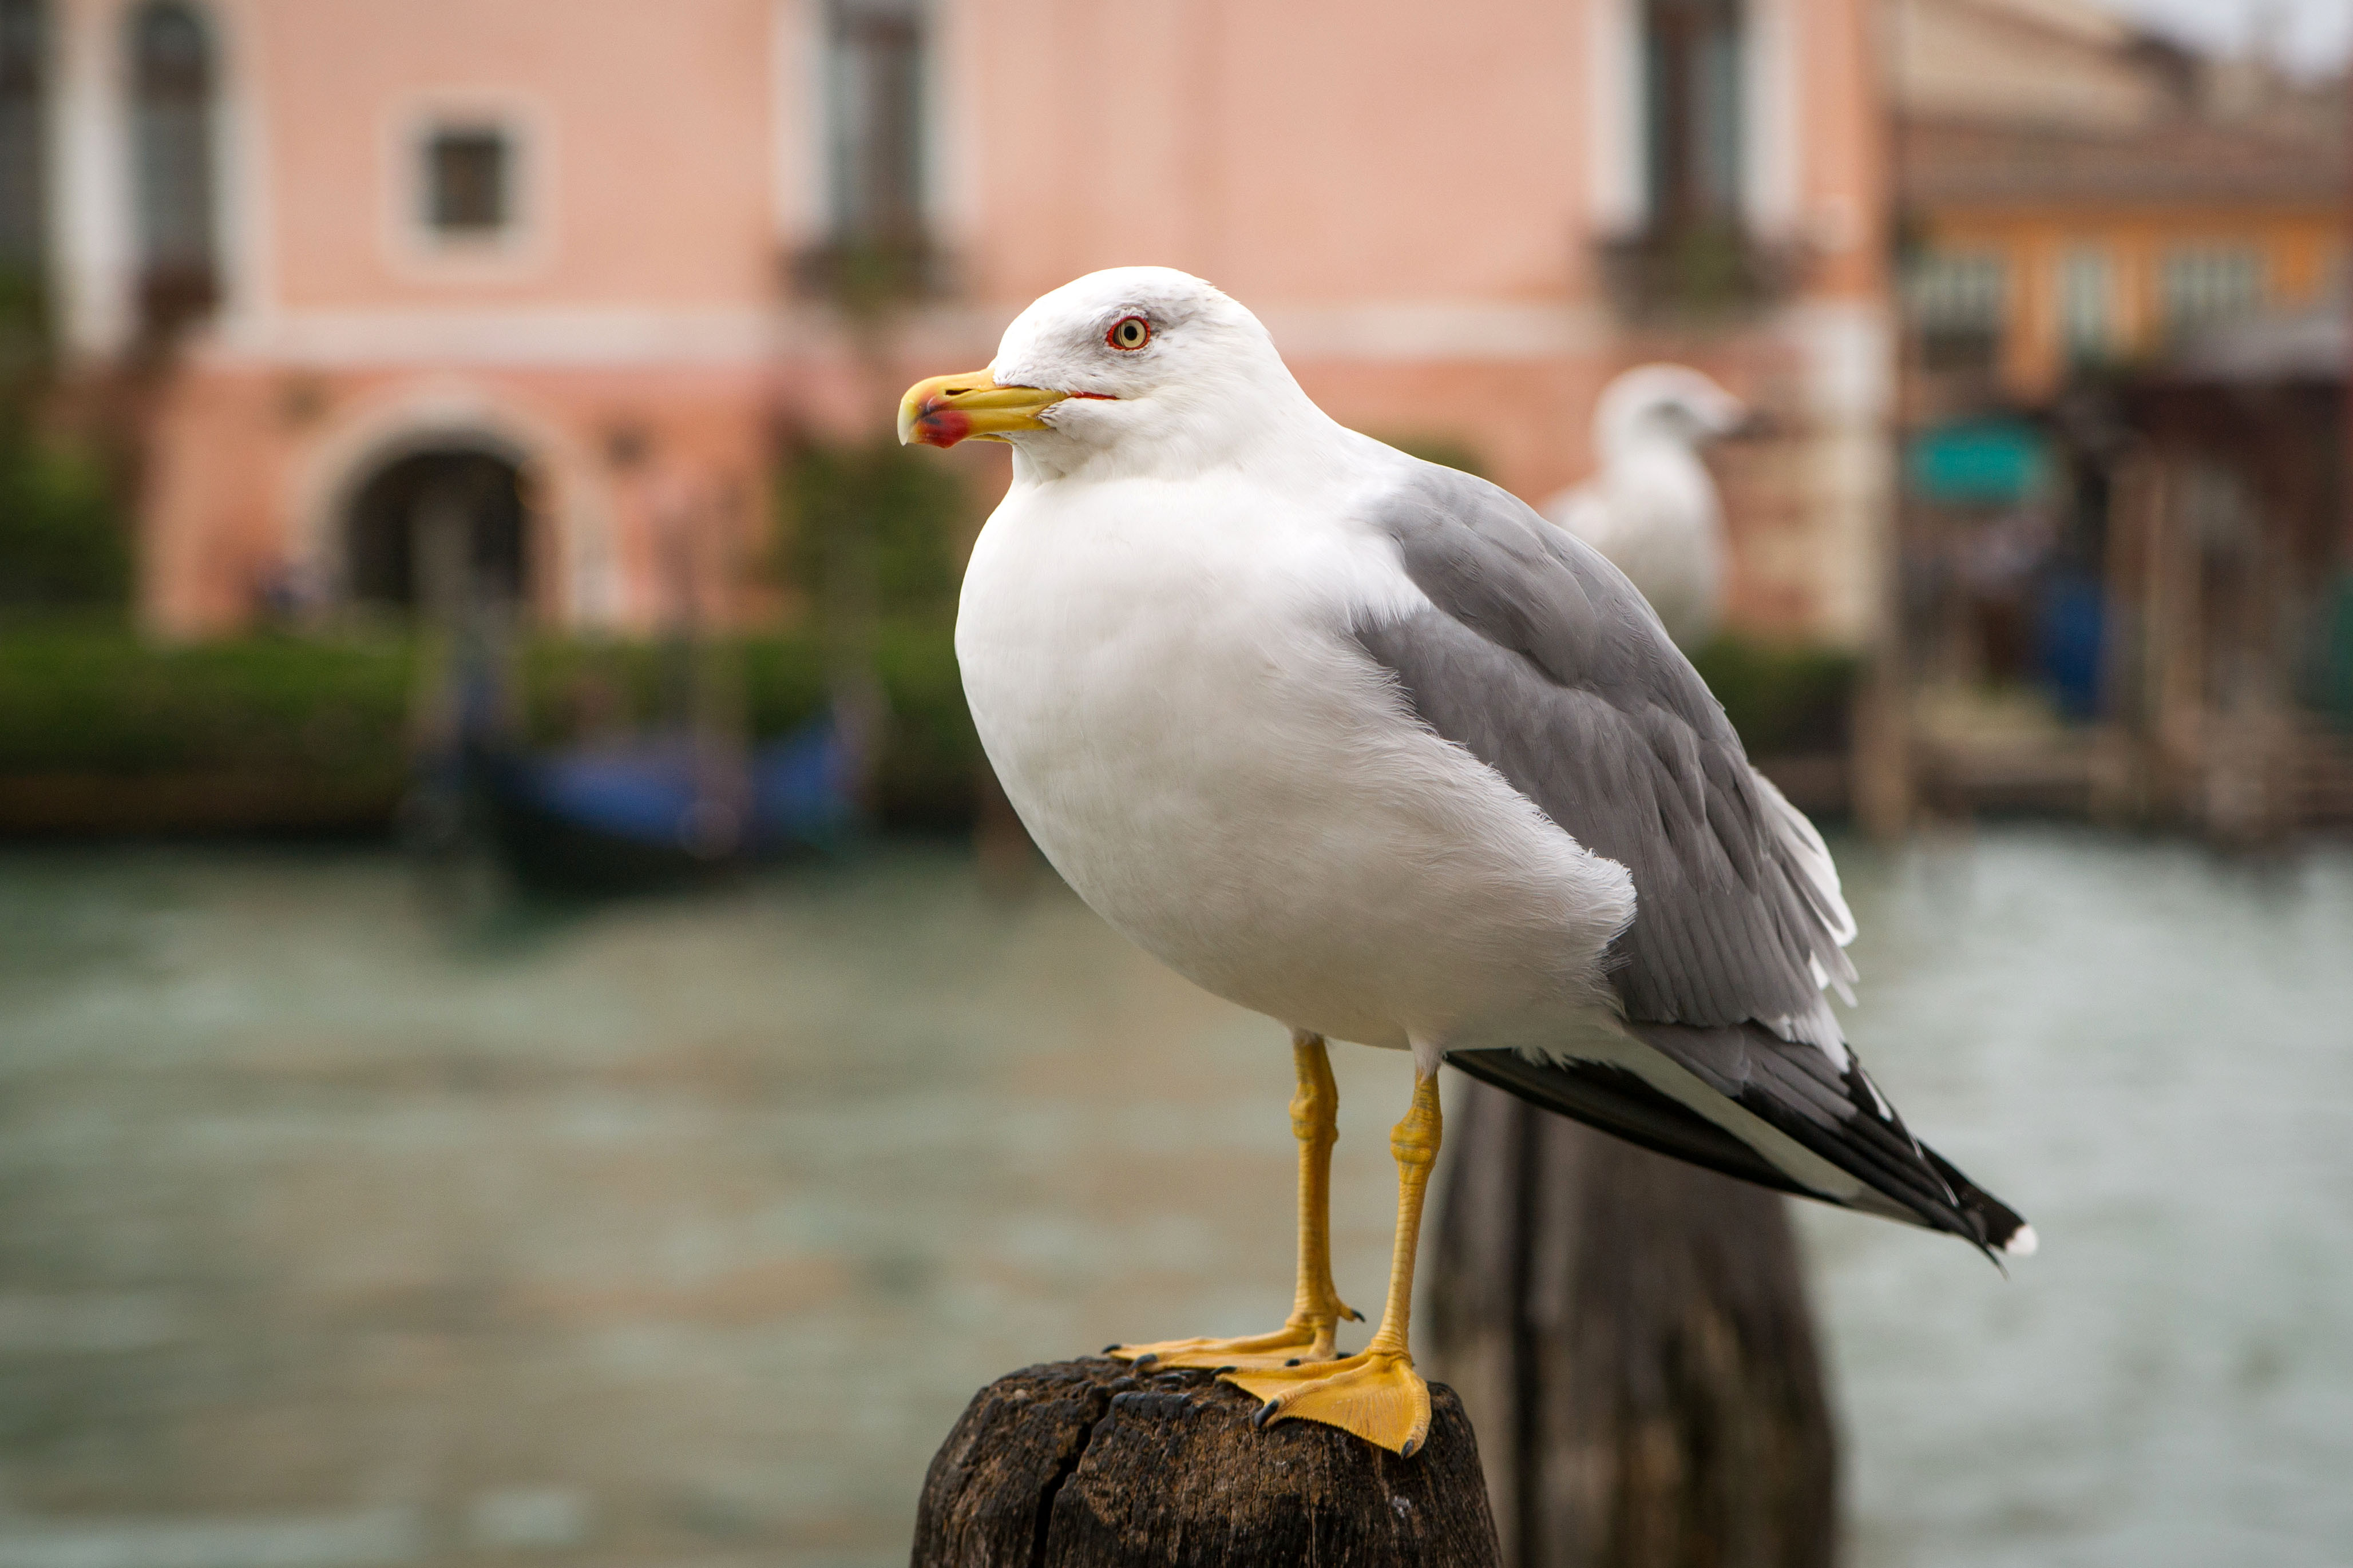 Violent seagulls are taking over St. Mark's Square in Venice